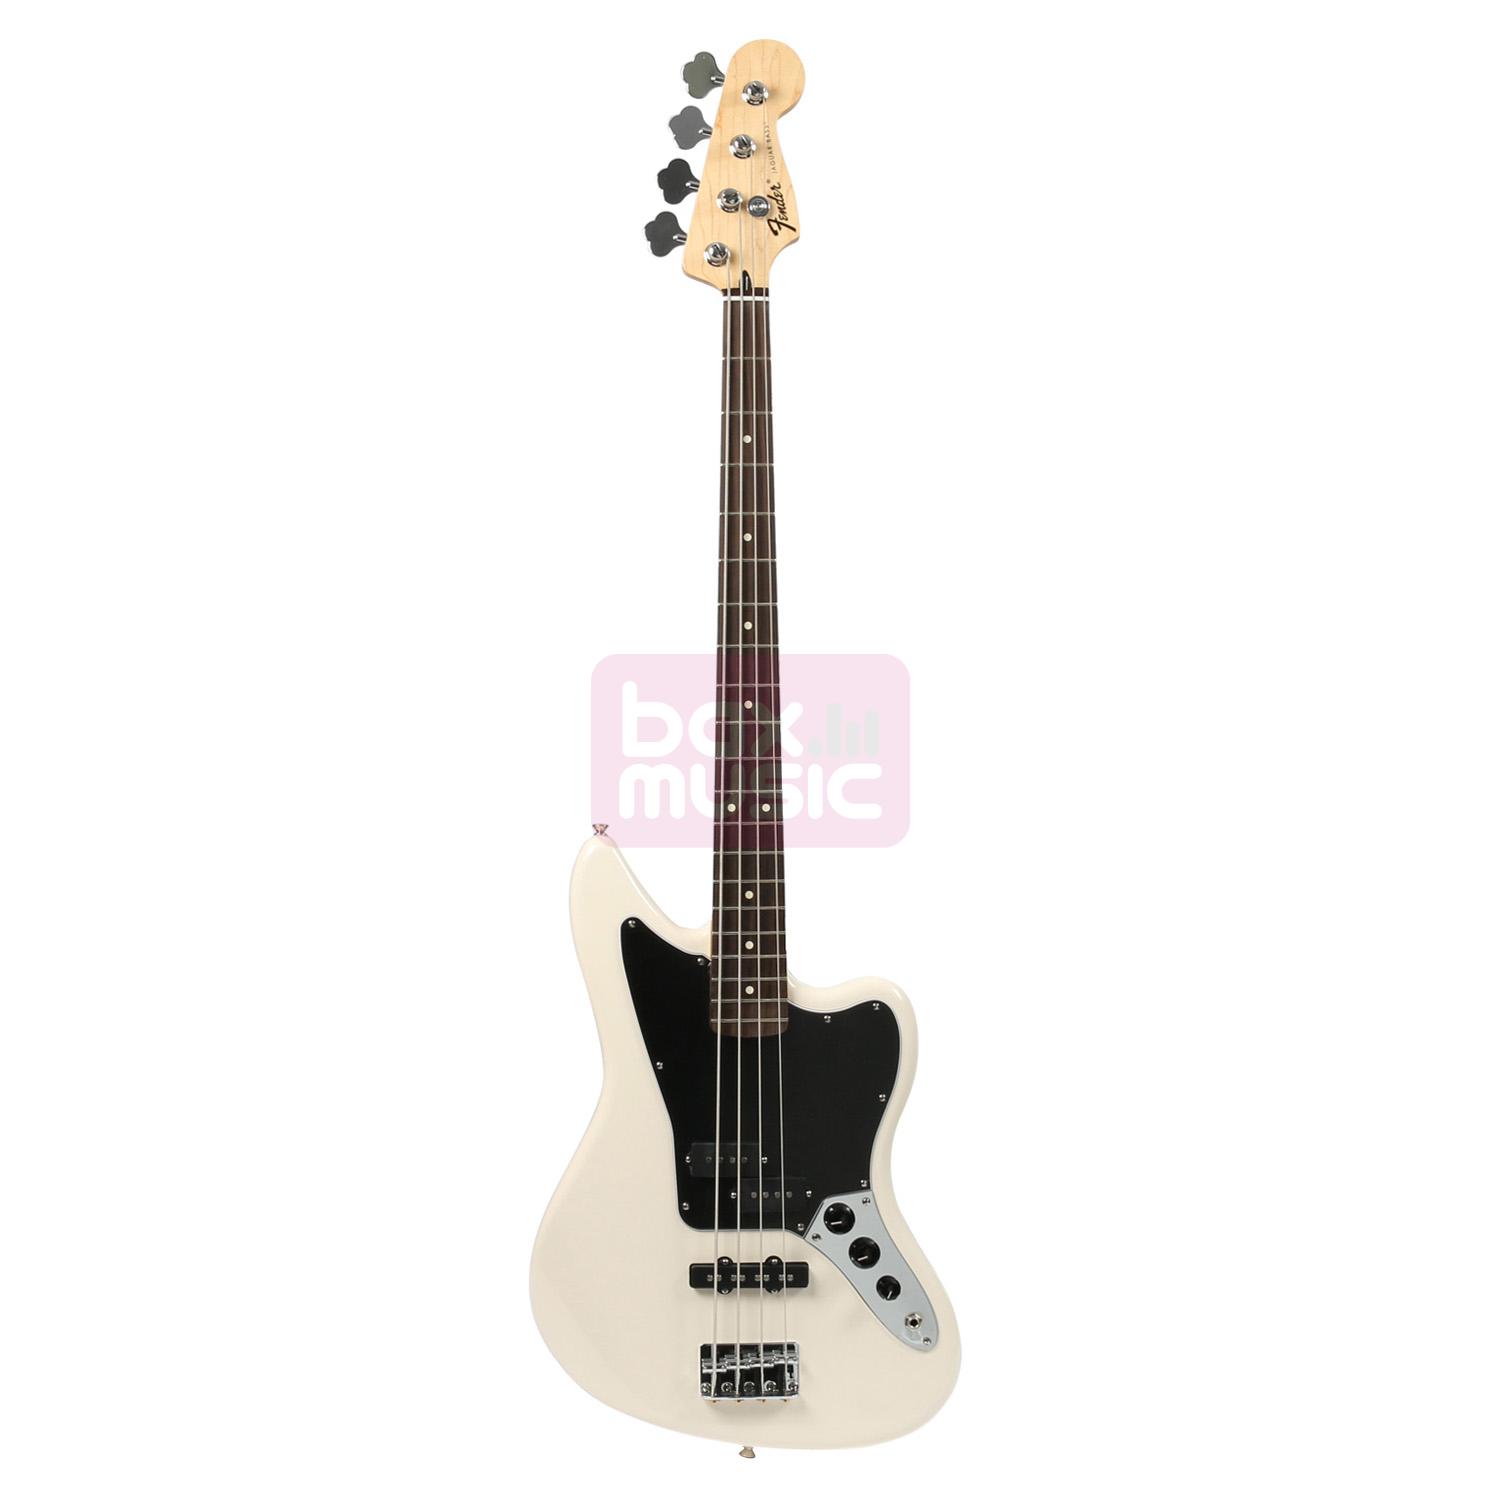 Fender Standard Jaguar Bass RW Olympic White